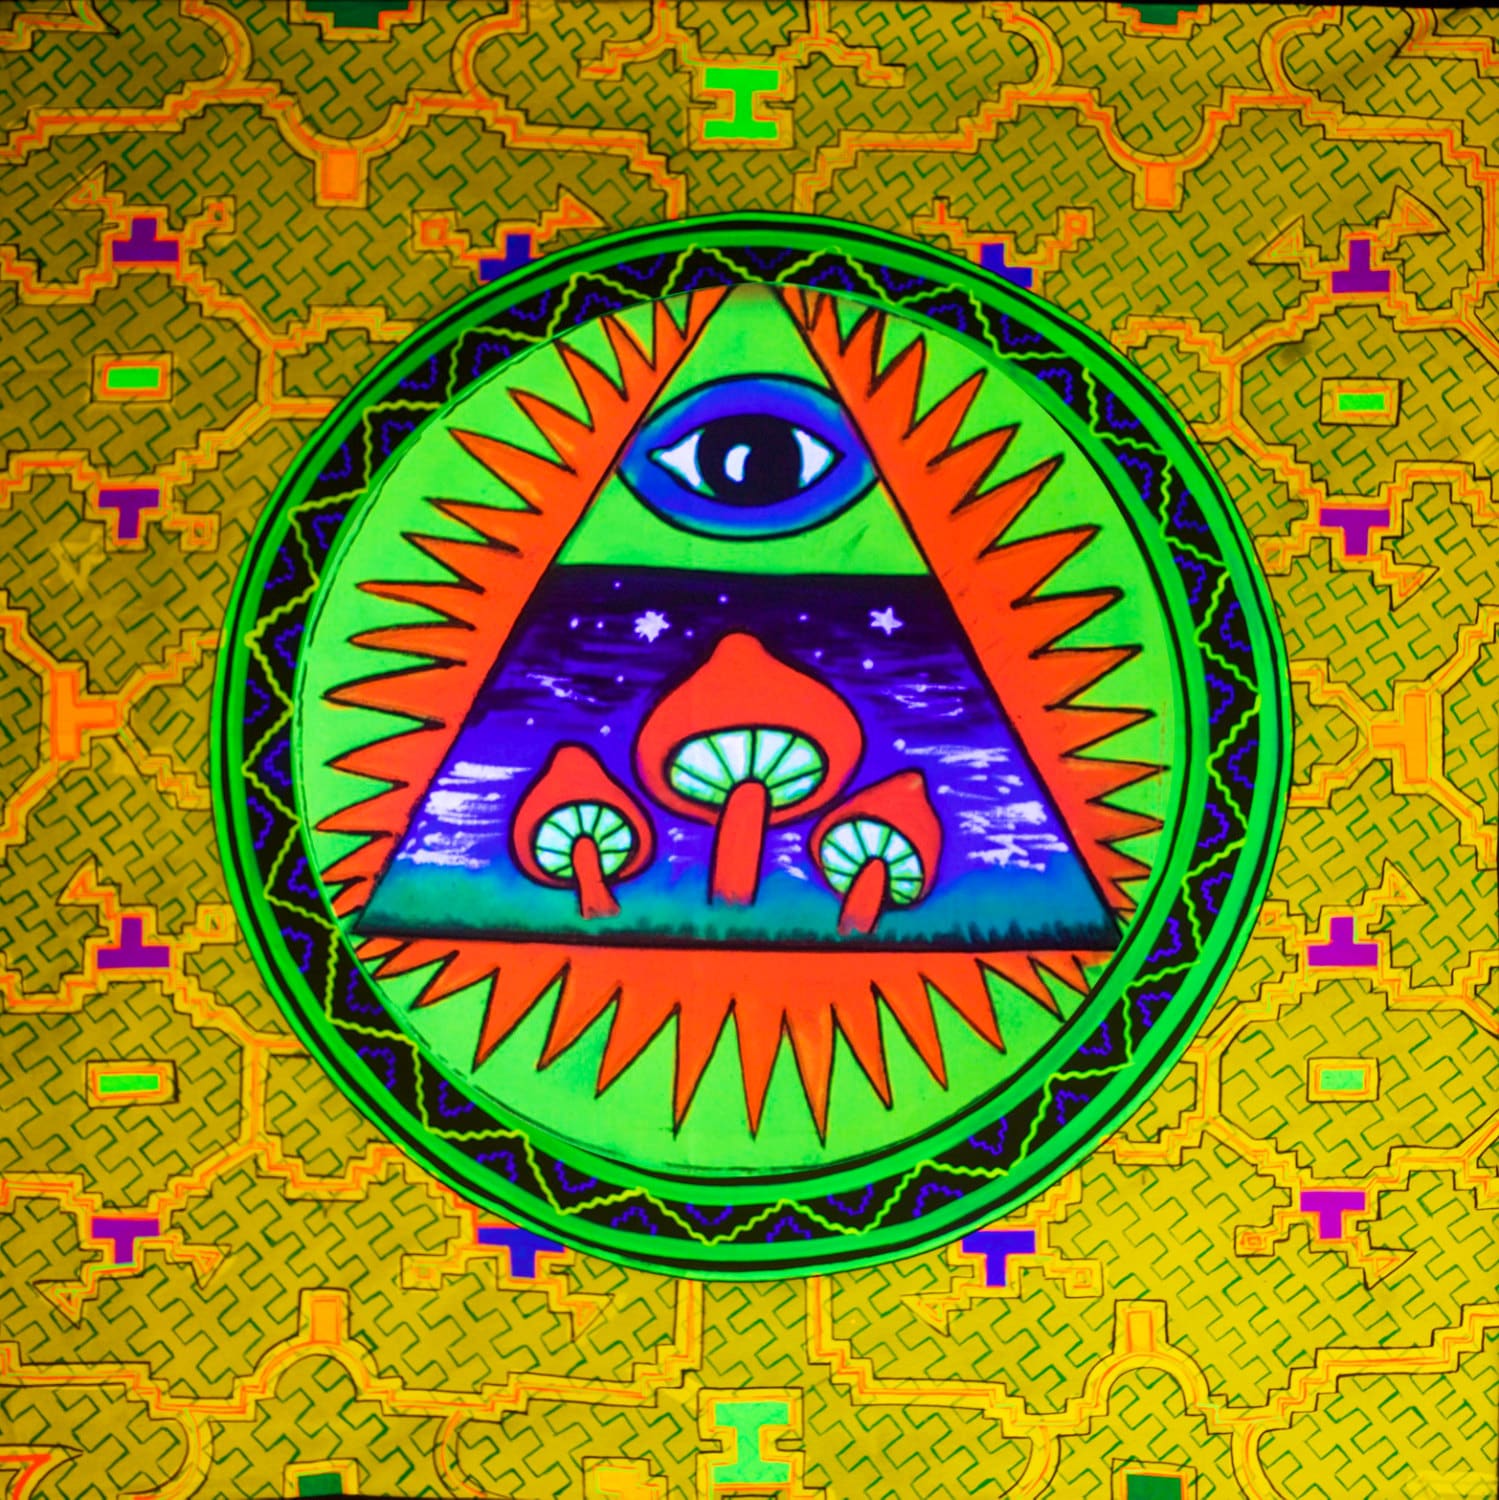 Illuminatihuasca - fully blacklight glowing painting - psychedelic UV shipibo conibo magic mushroom artwork